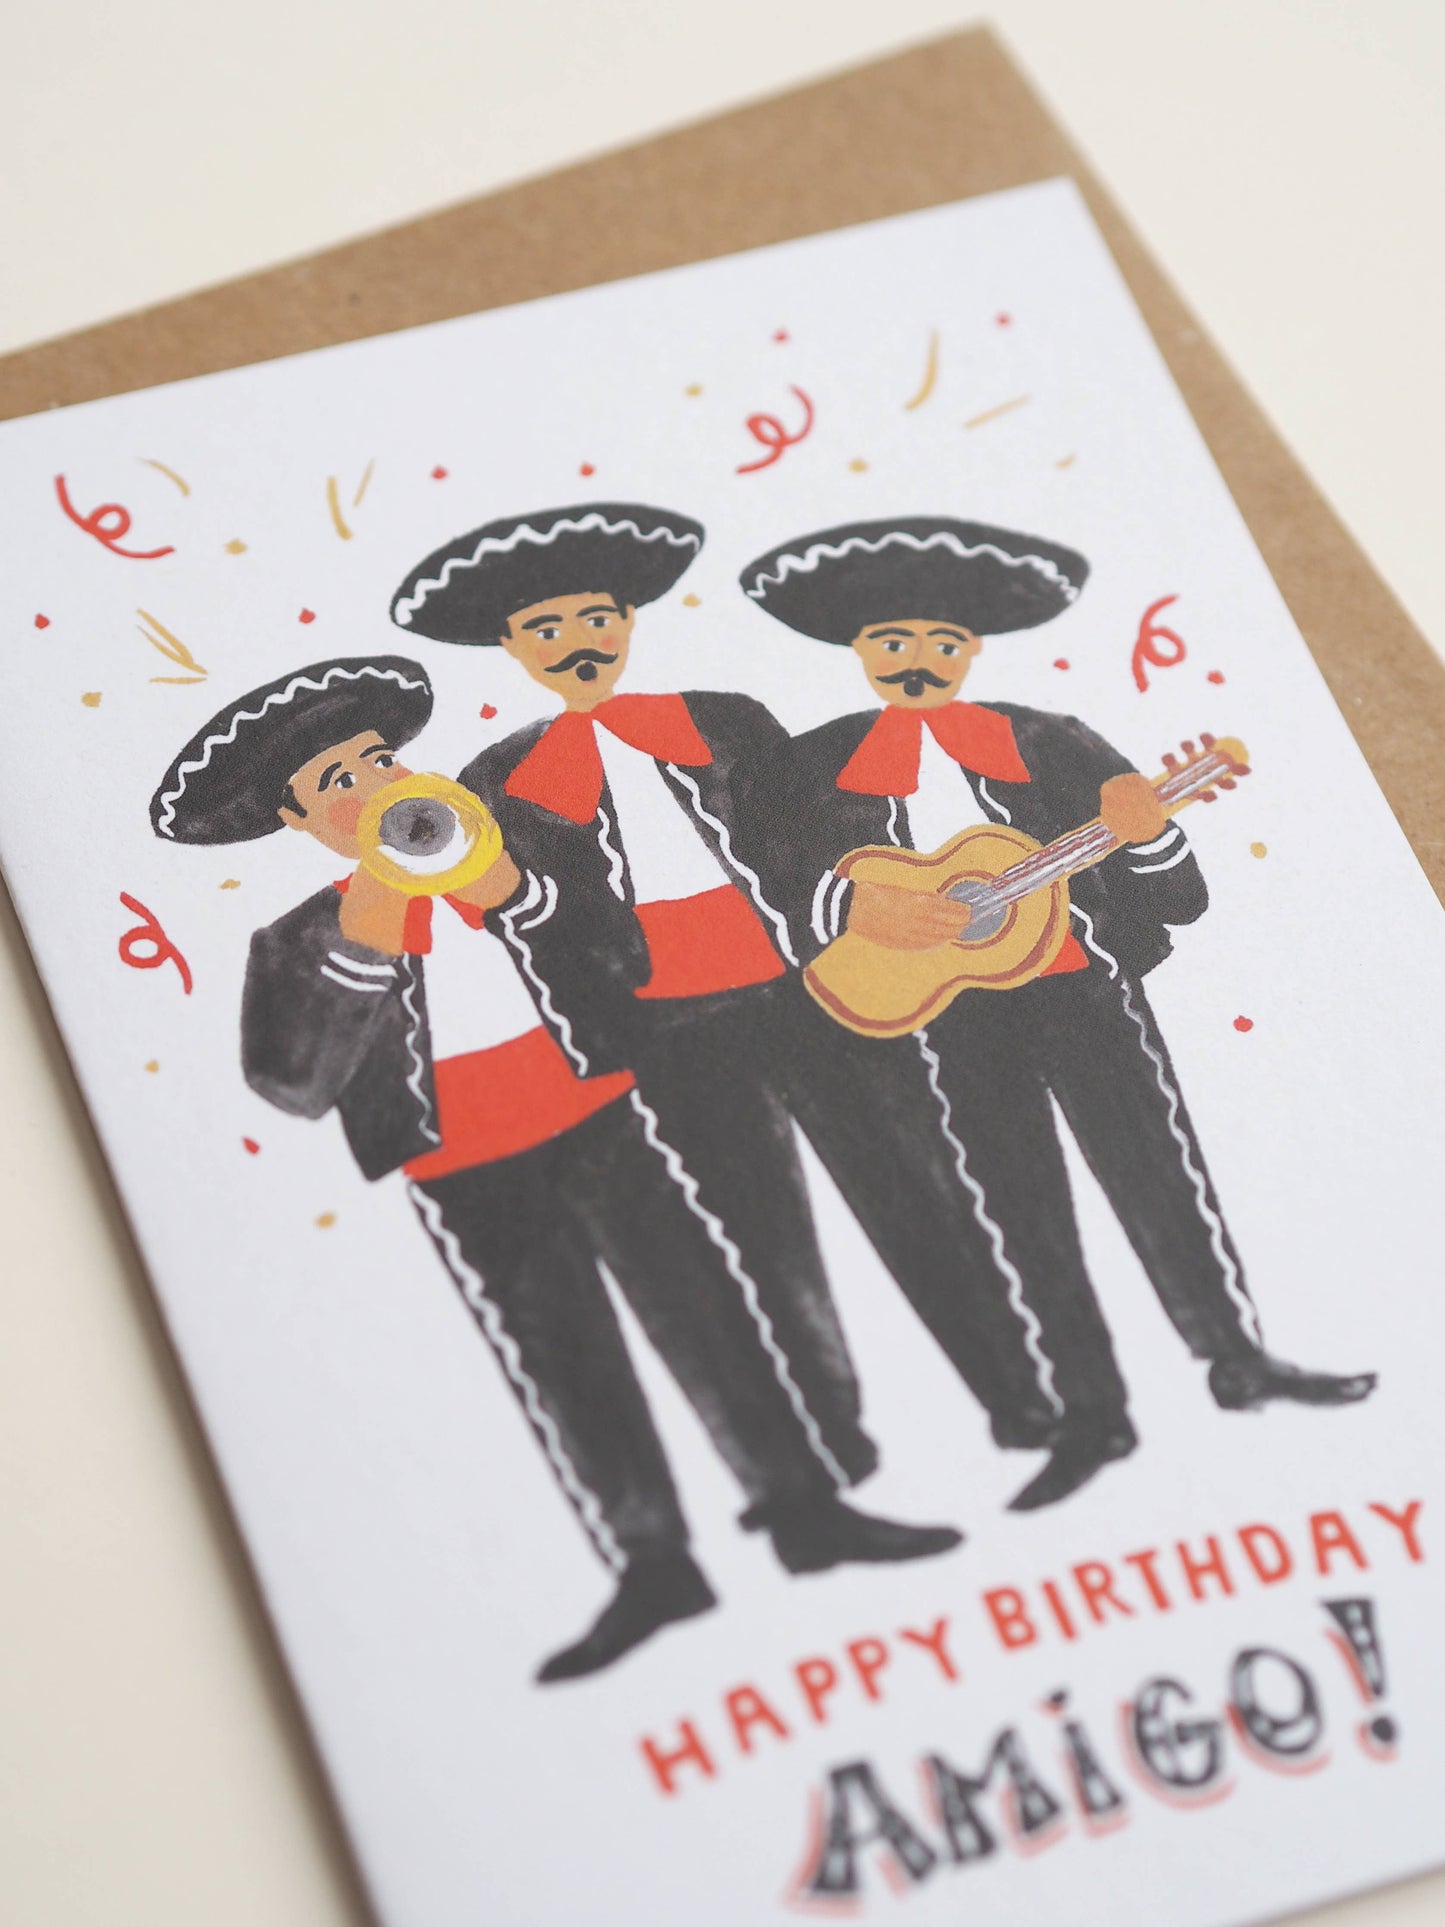 "Happy Birthday Amigo!" Mariachi Birthday Card